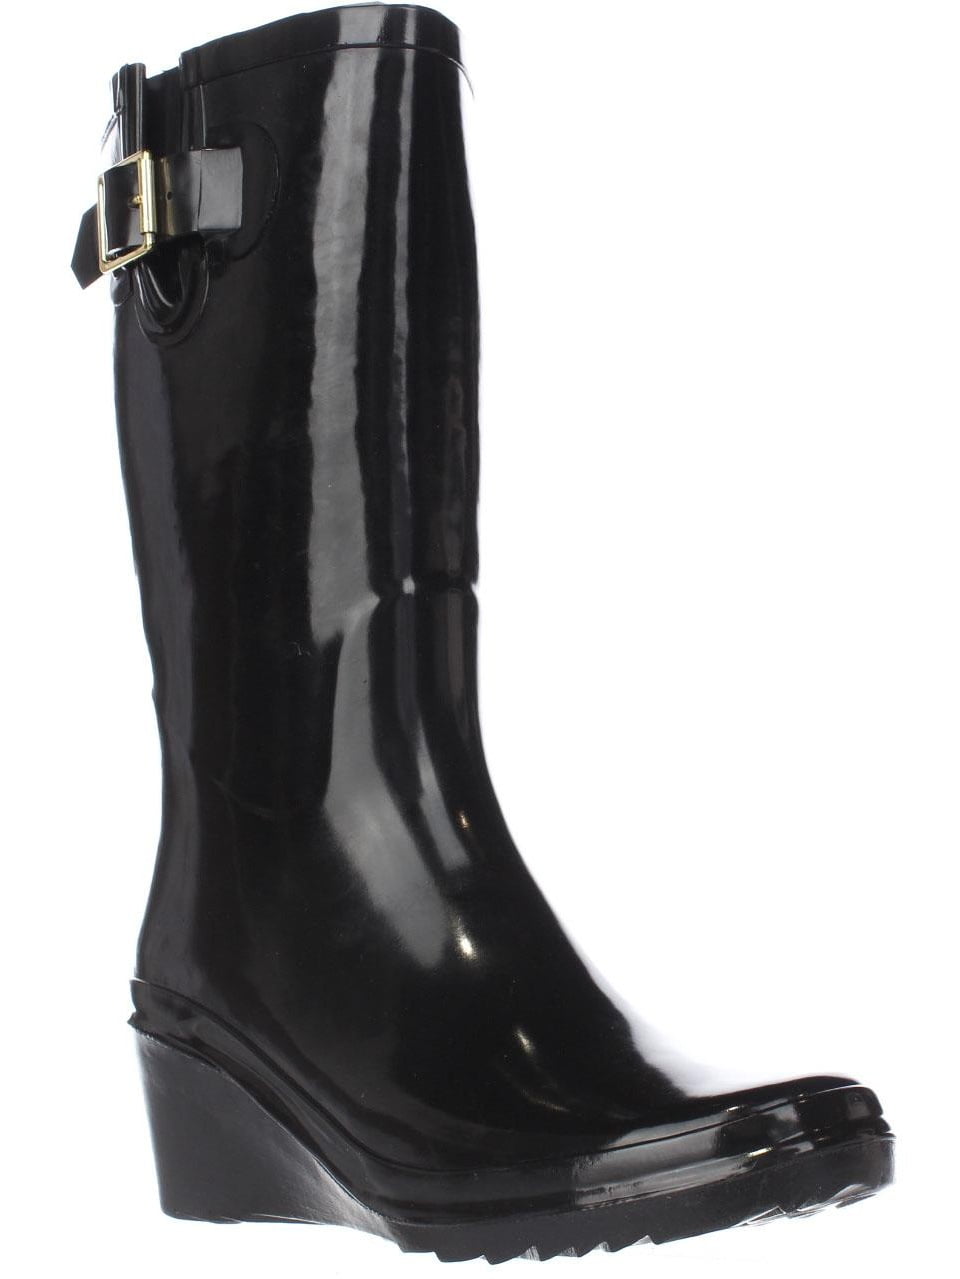 Womens GB35 Alley Wedge Rain Boots - Black - Walmart.com